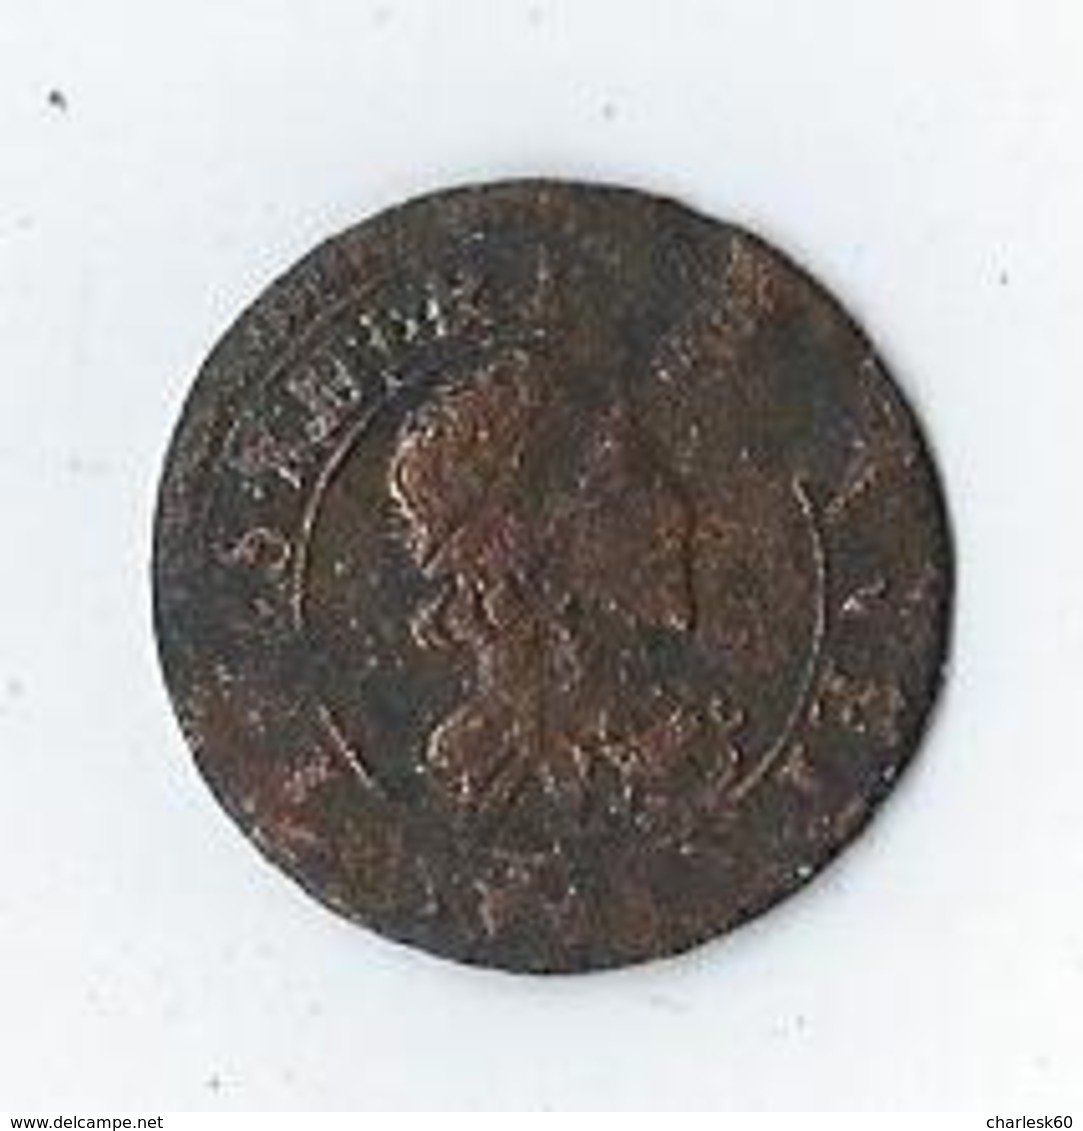 Monnaie France Louis XIII Double Lorrain - 1610-1643 Luigi XIII Il Giusto